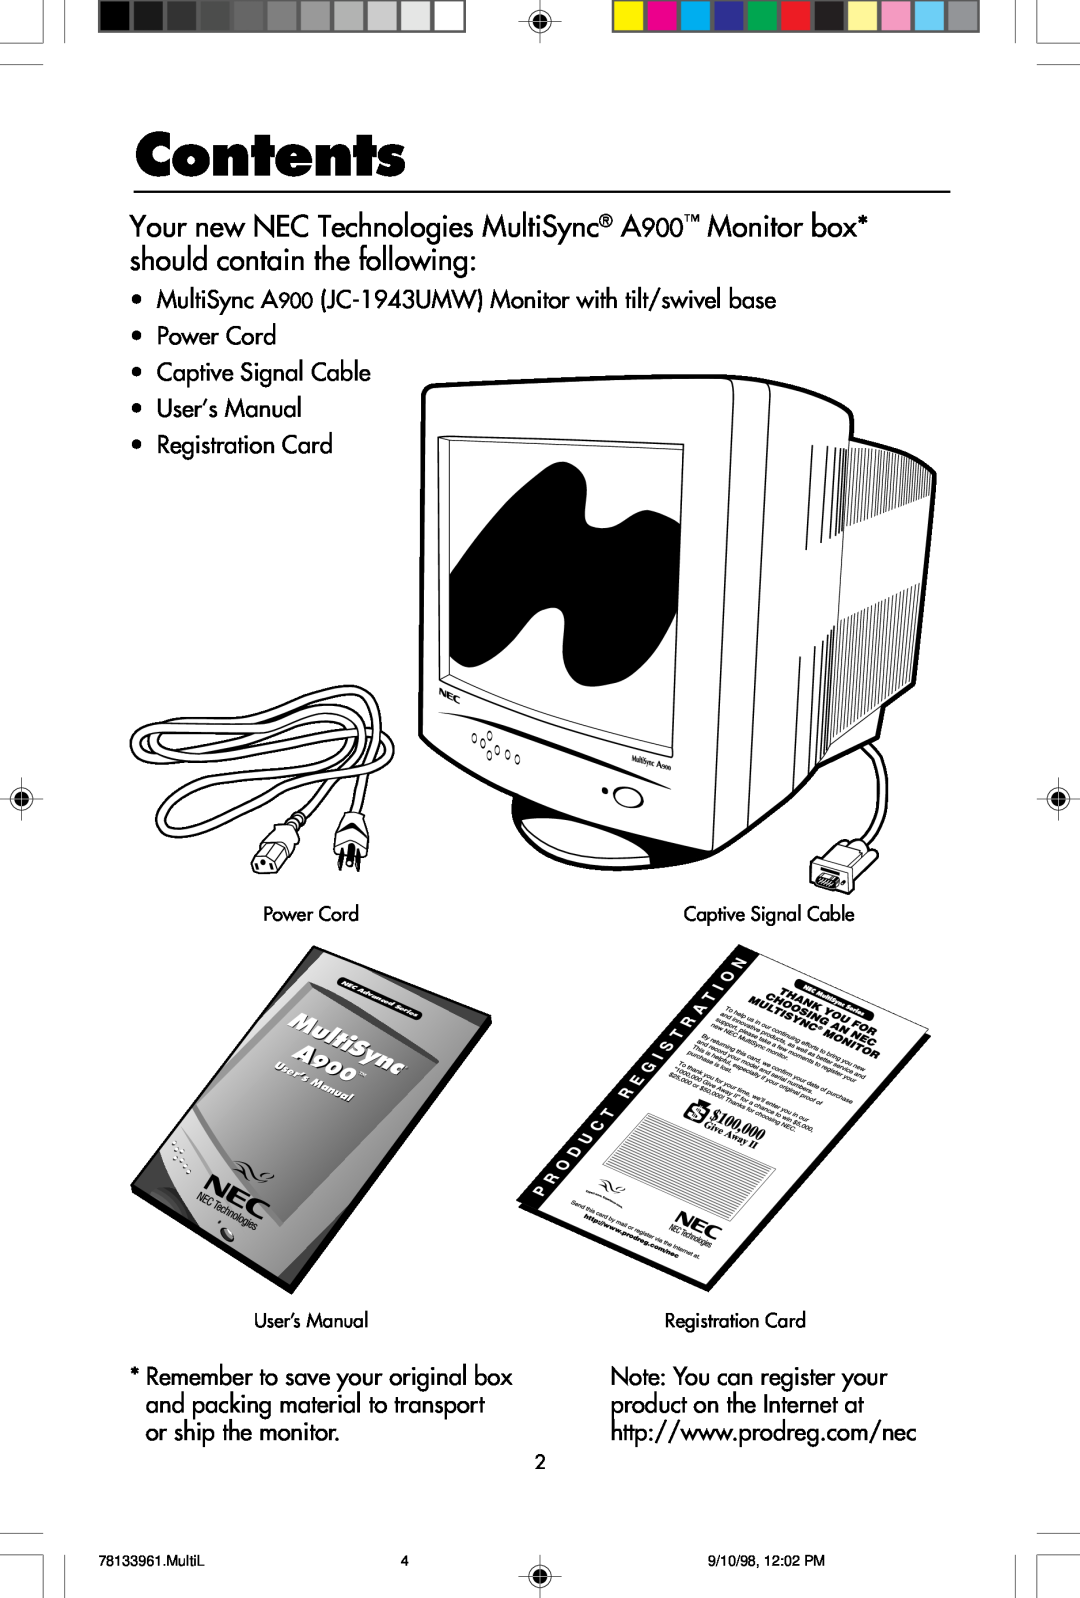 NEC A900 user manual Contents, MultiSync 